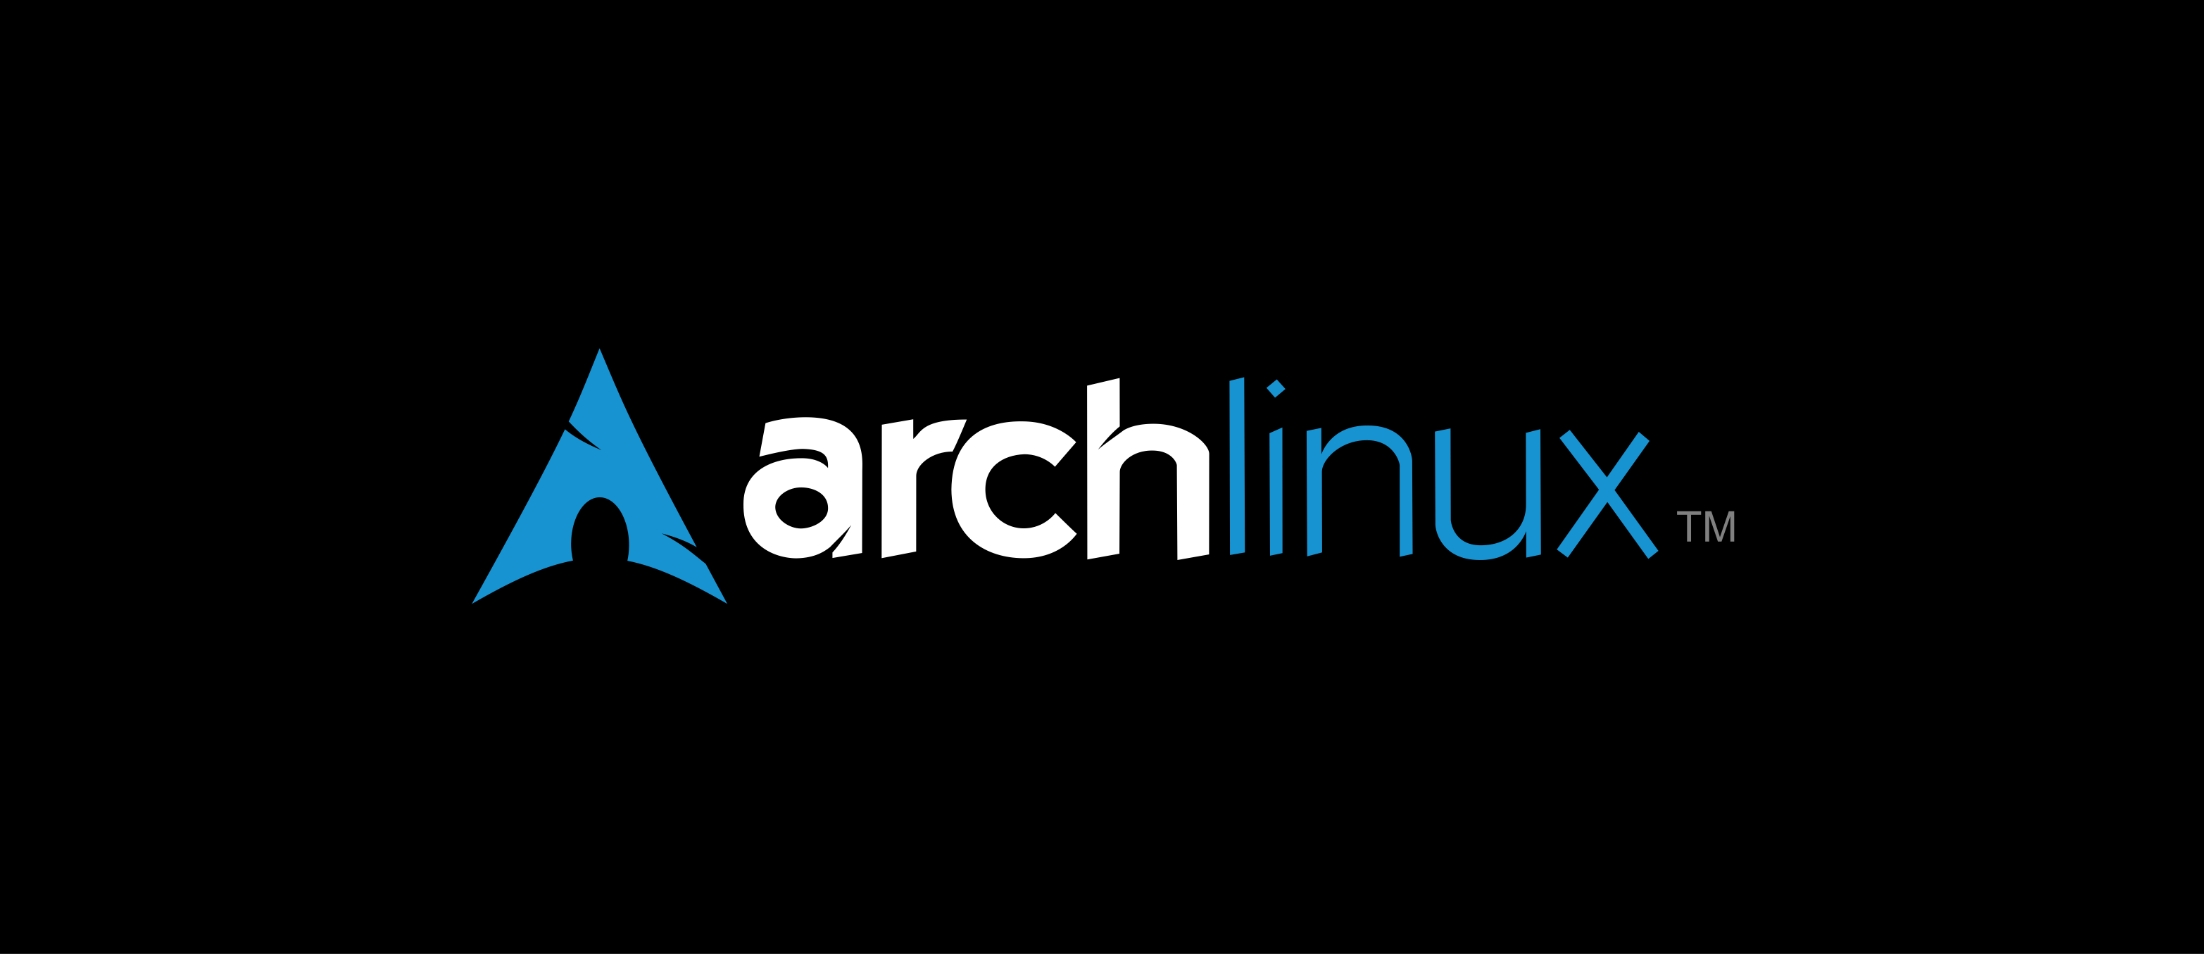 arch linux macbook 9 2